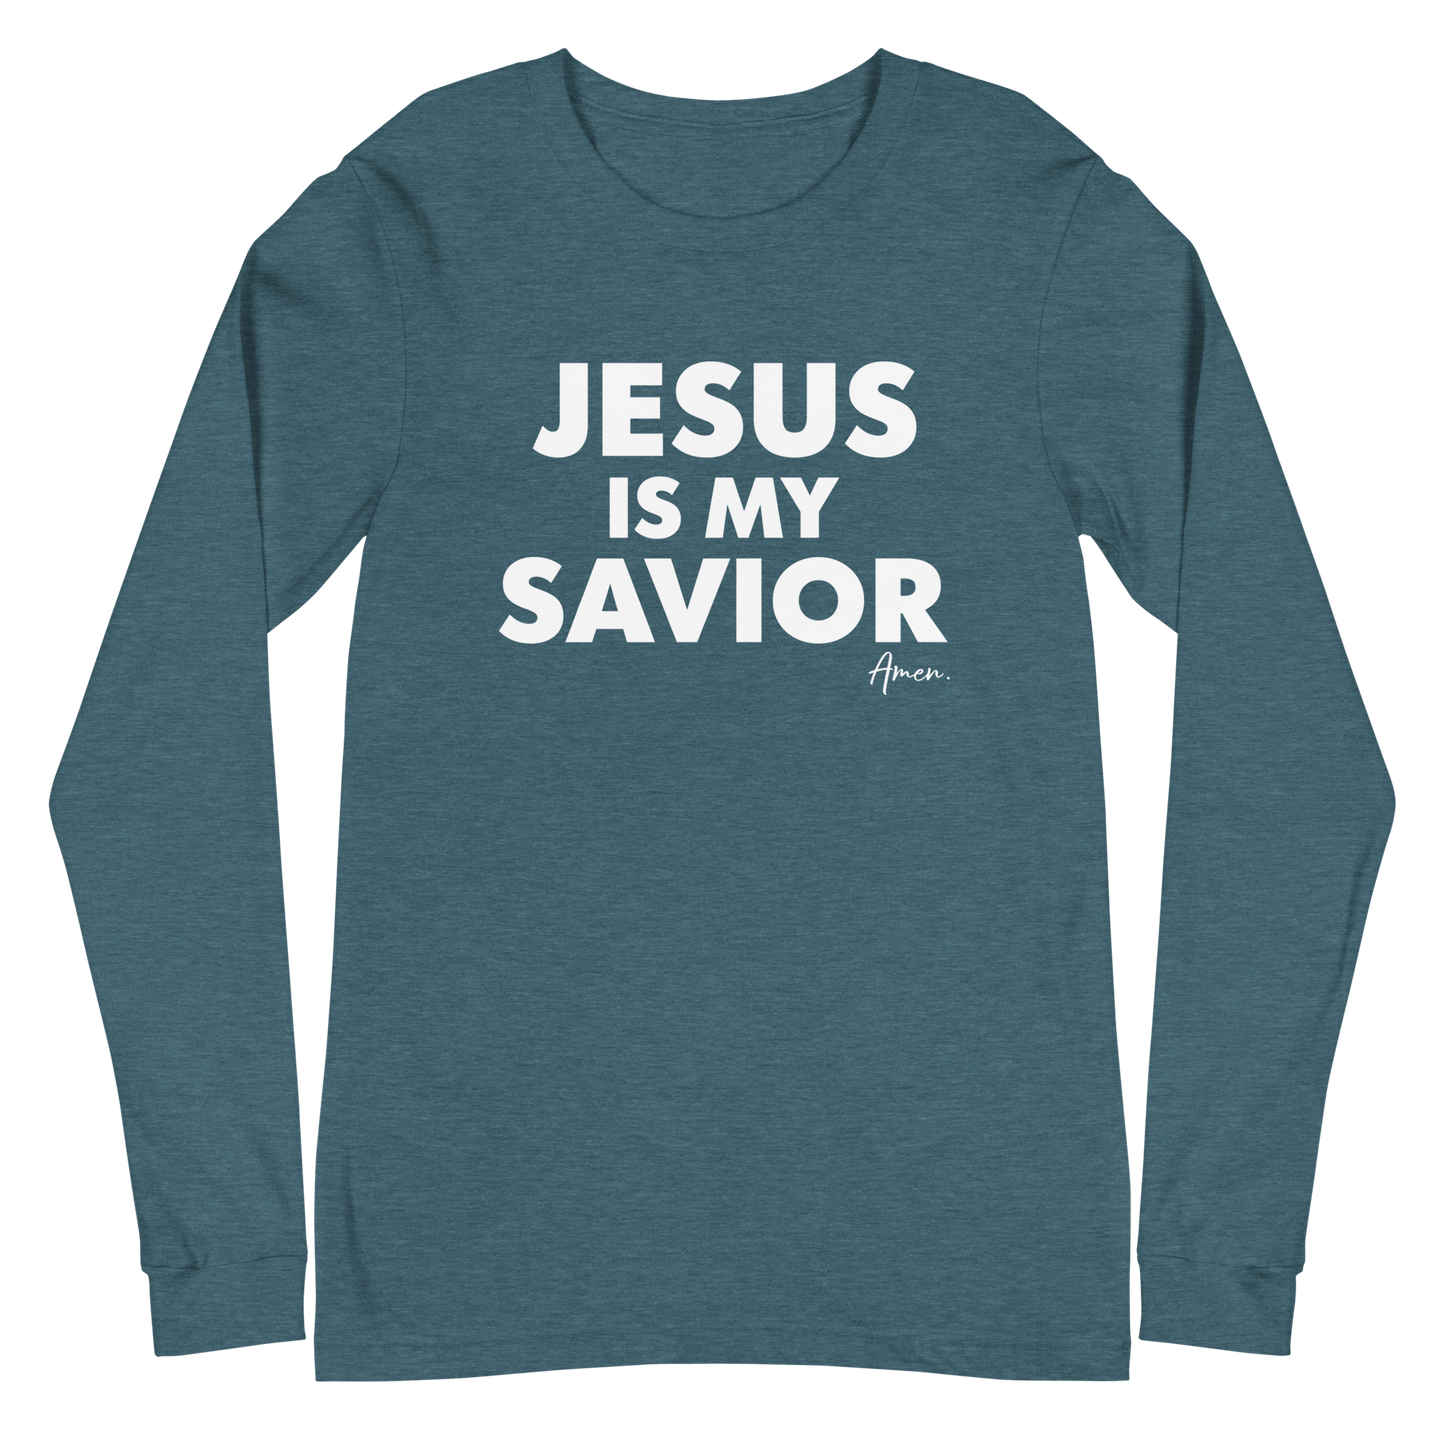 Jesus is my Savior - Men's Long Sleeve